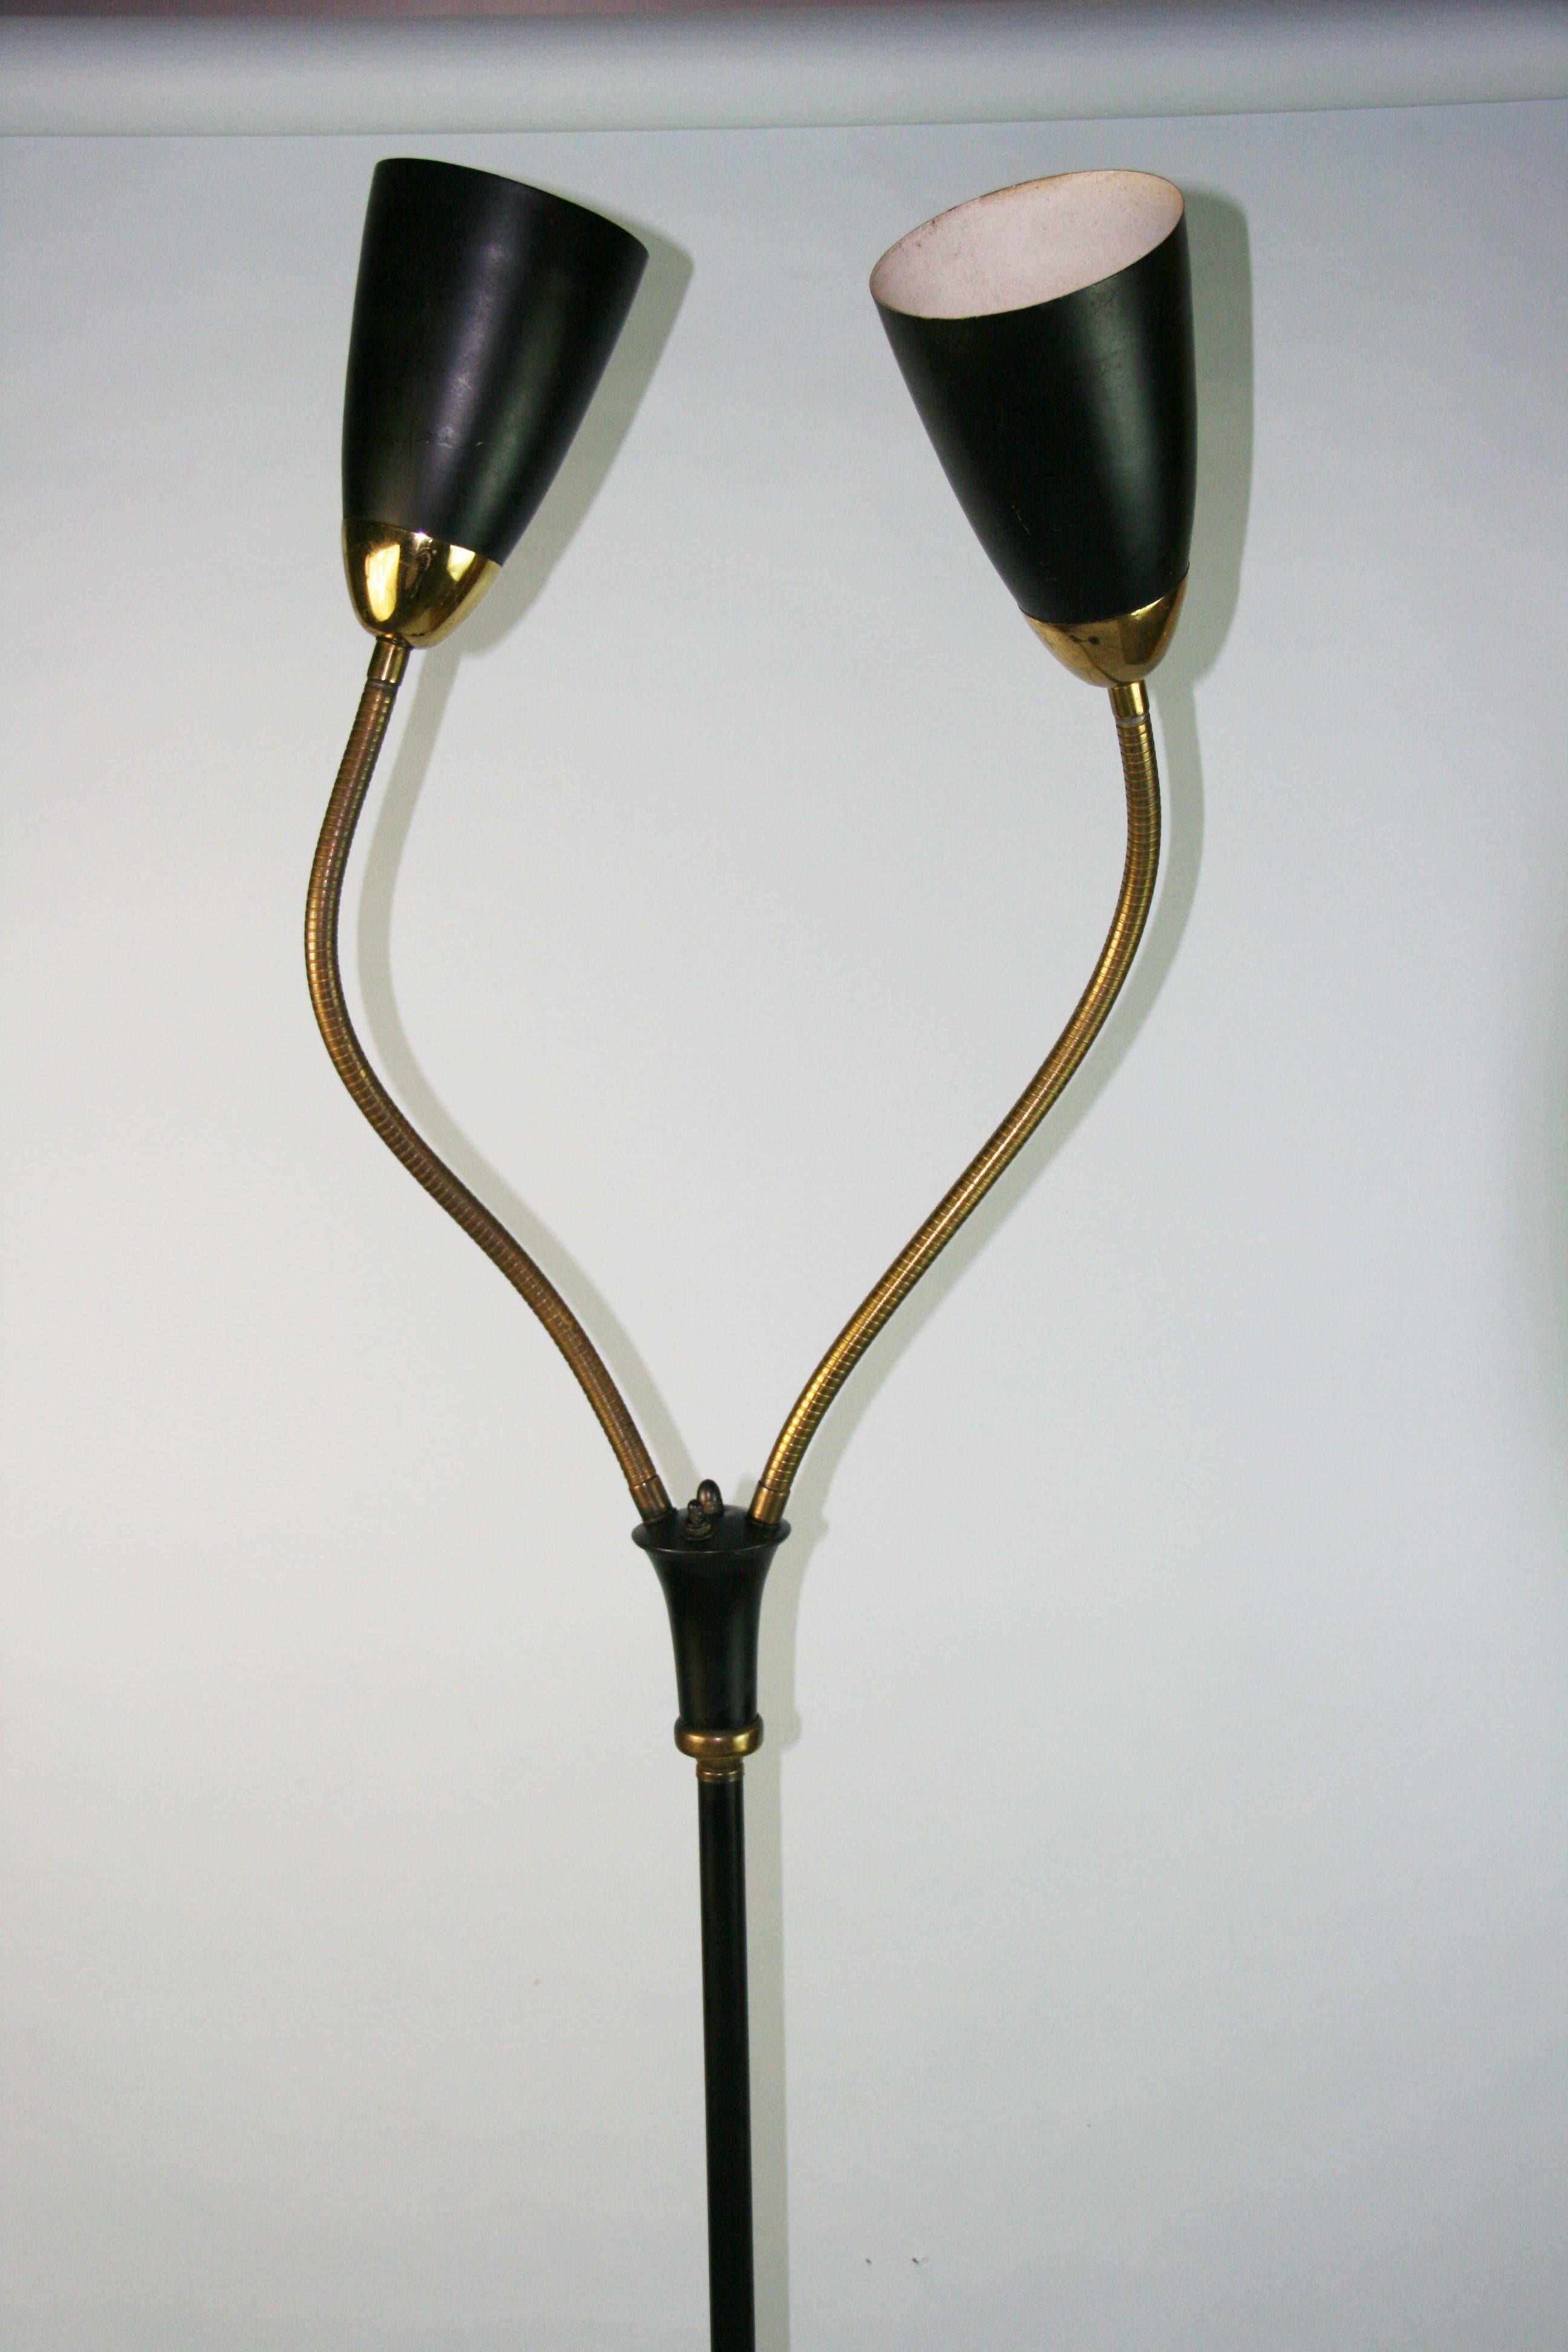 Italian Designer Flexible Arm Brass and Metal Floor Lamp 1950's For Sale 5